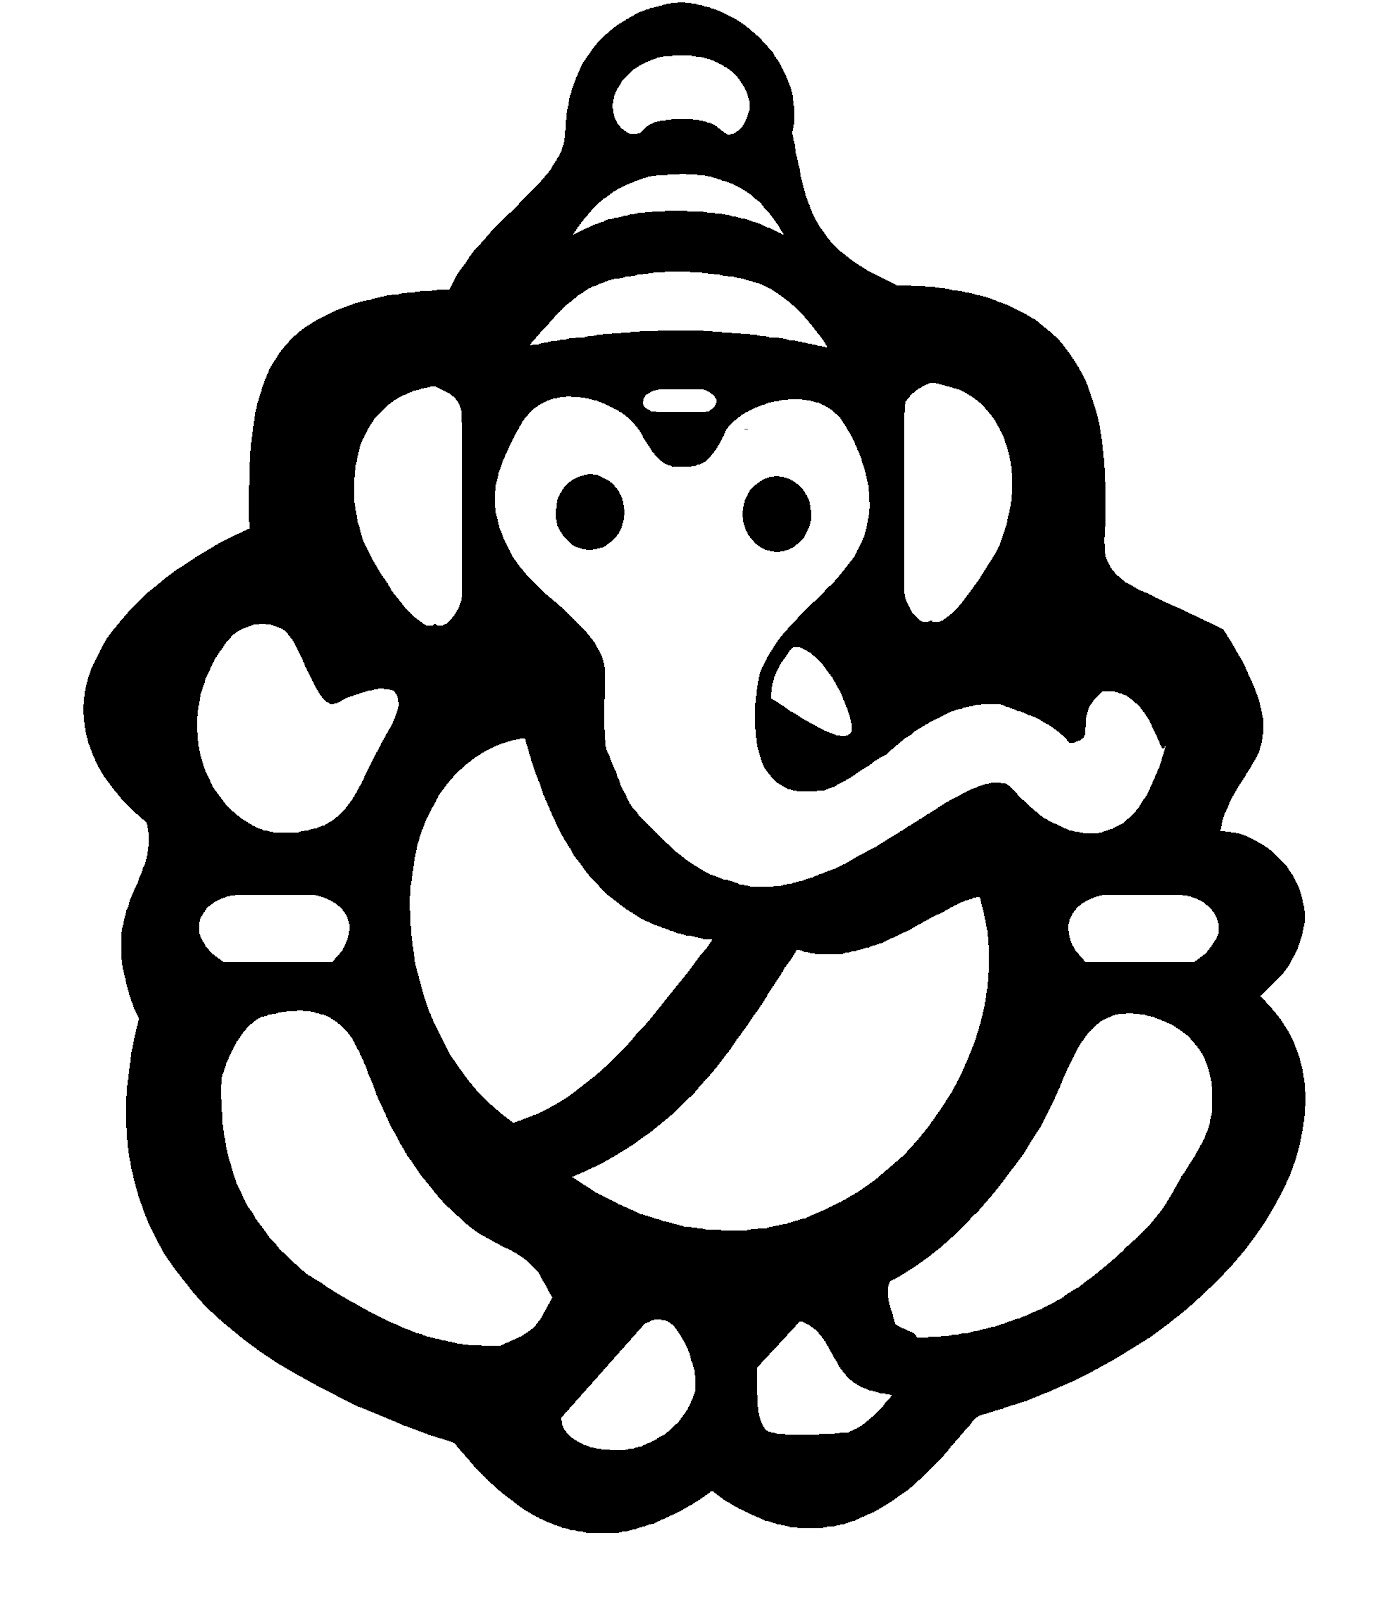 Lord Ganesha Clip Art - ClipArt Best